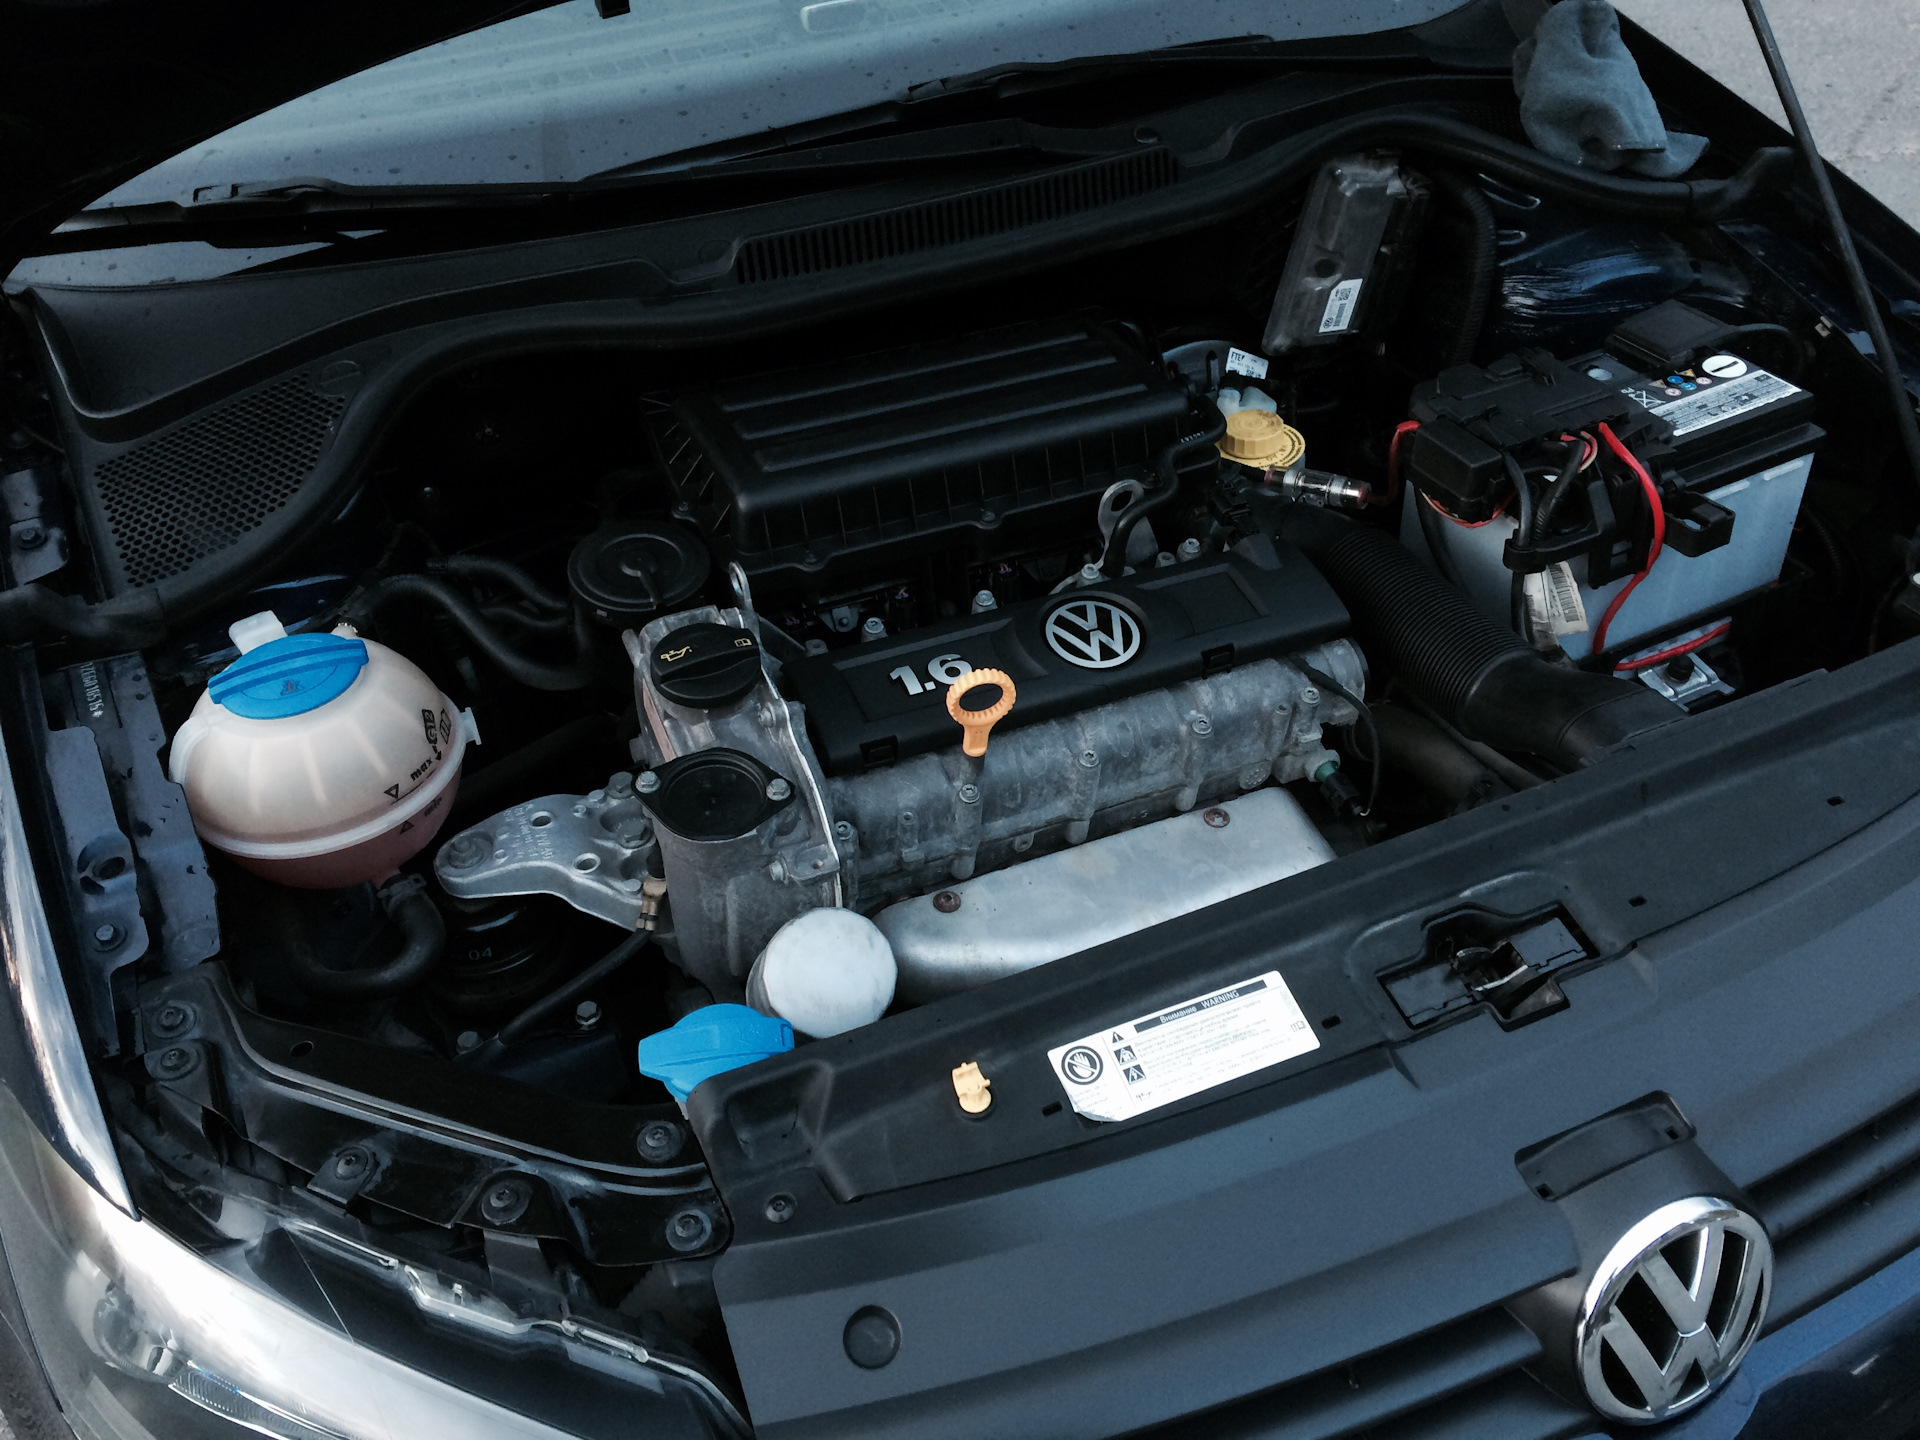 Volkswagen polo мотор. Двигатель Фольксваген поло седан 1.6 2014. Двигатель Фольксваген поло 1.6. Мотор Фольксваген поло 1,2. Двигатель Фольксваген Полло 1.6.